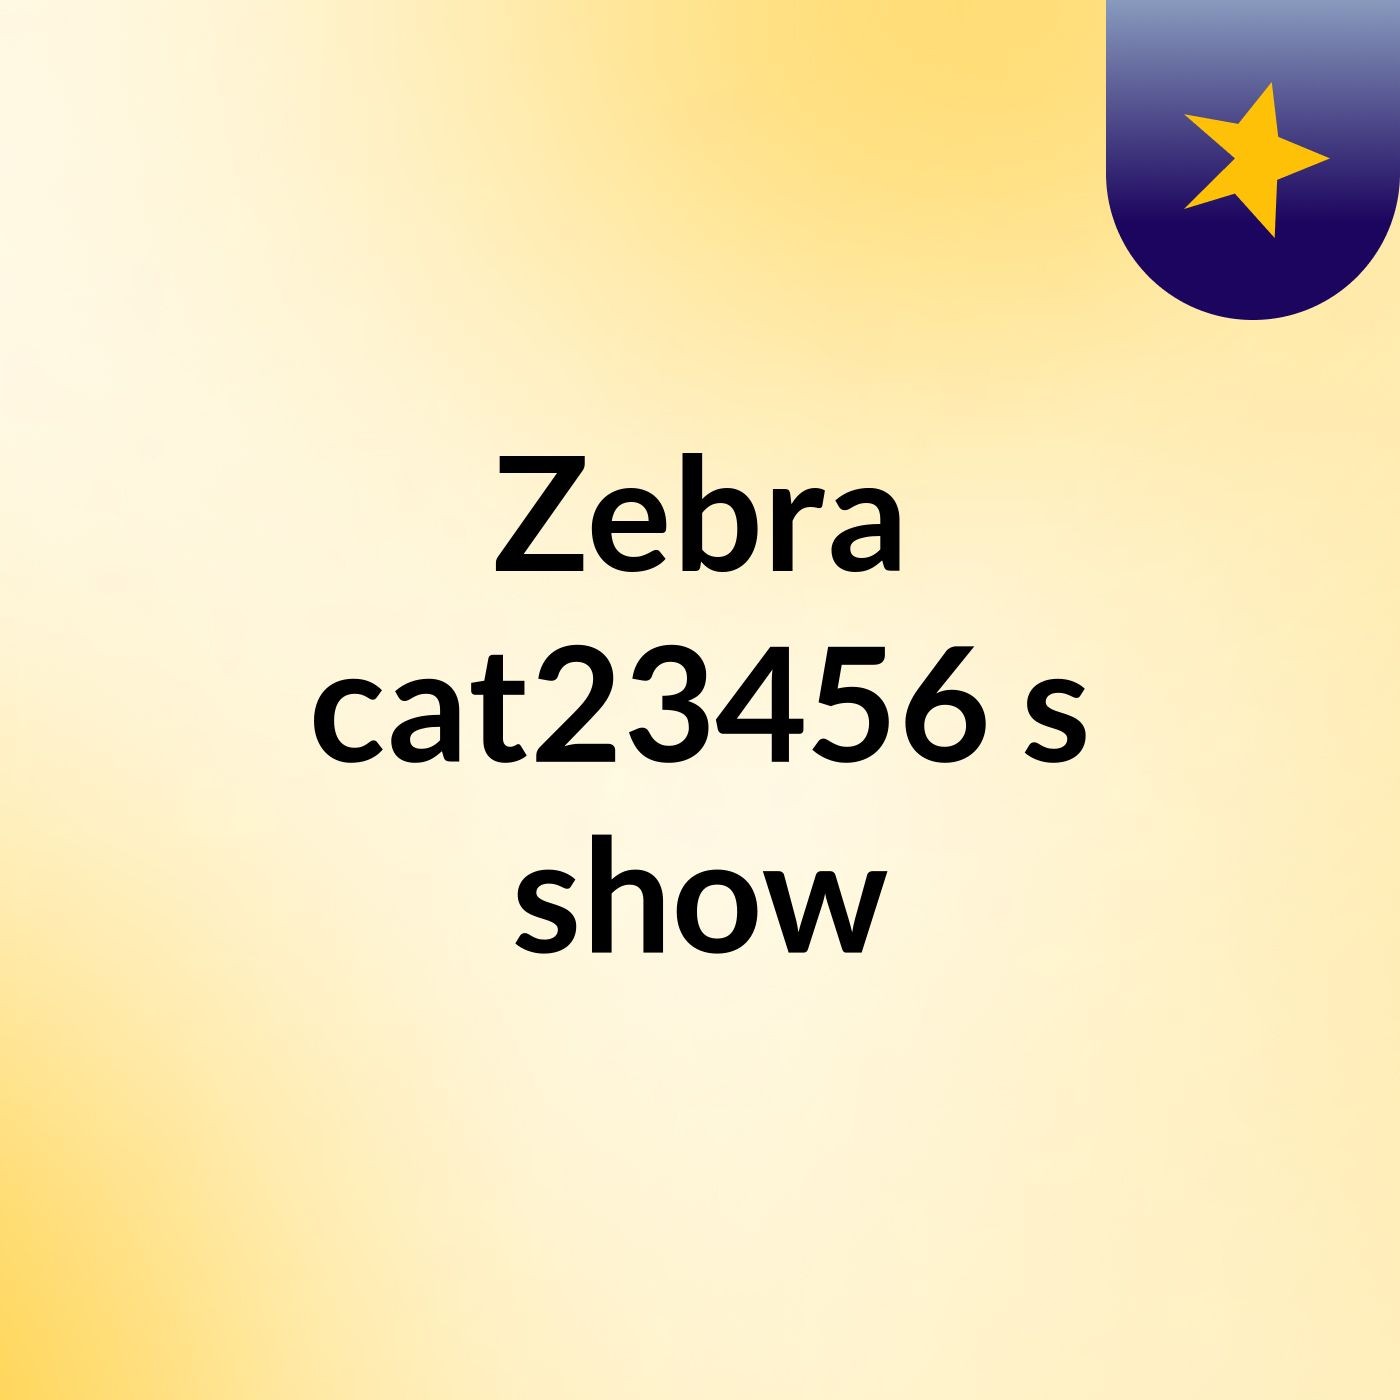 Episode 2 - Zebra cat23456's show